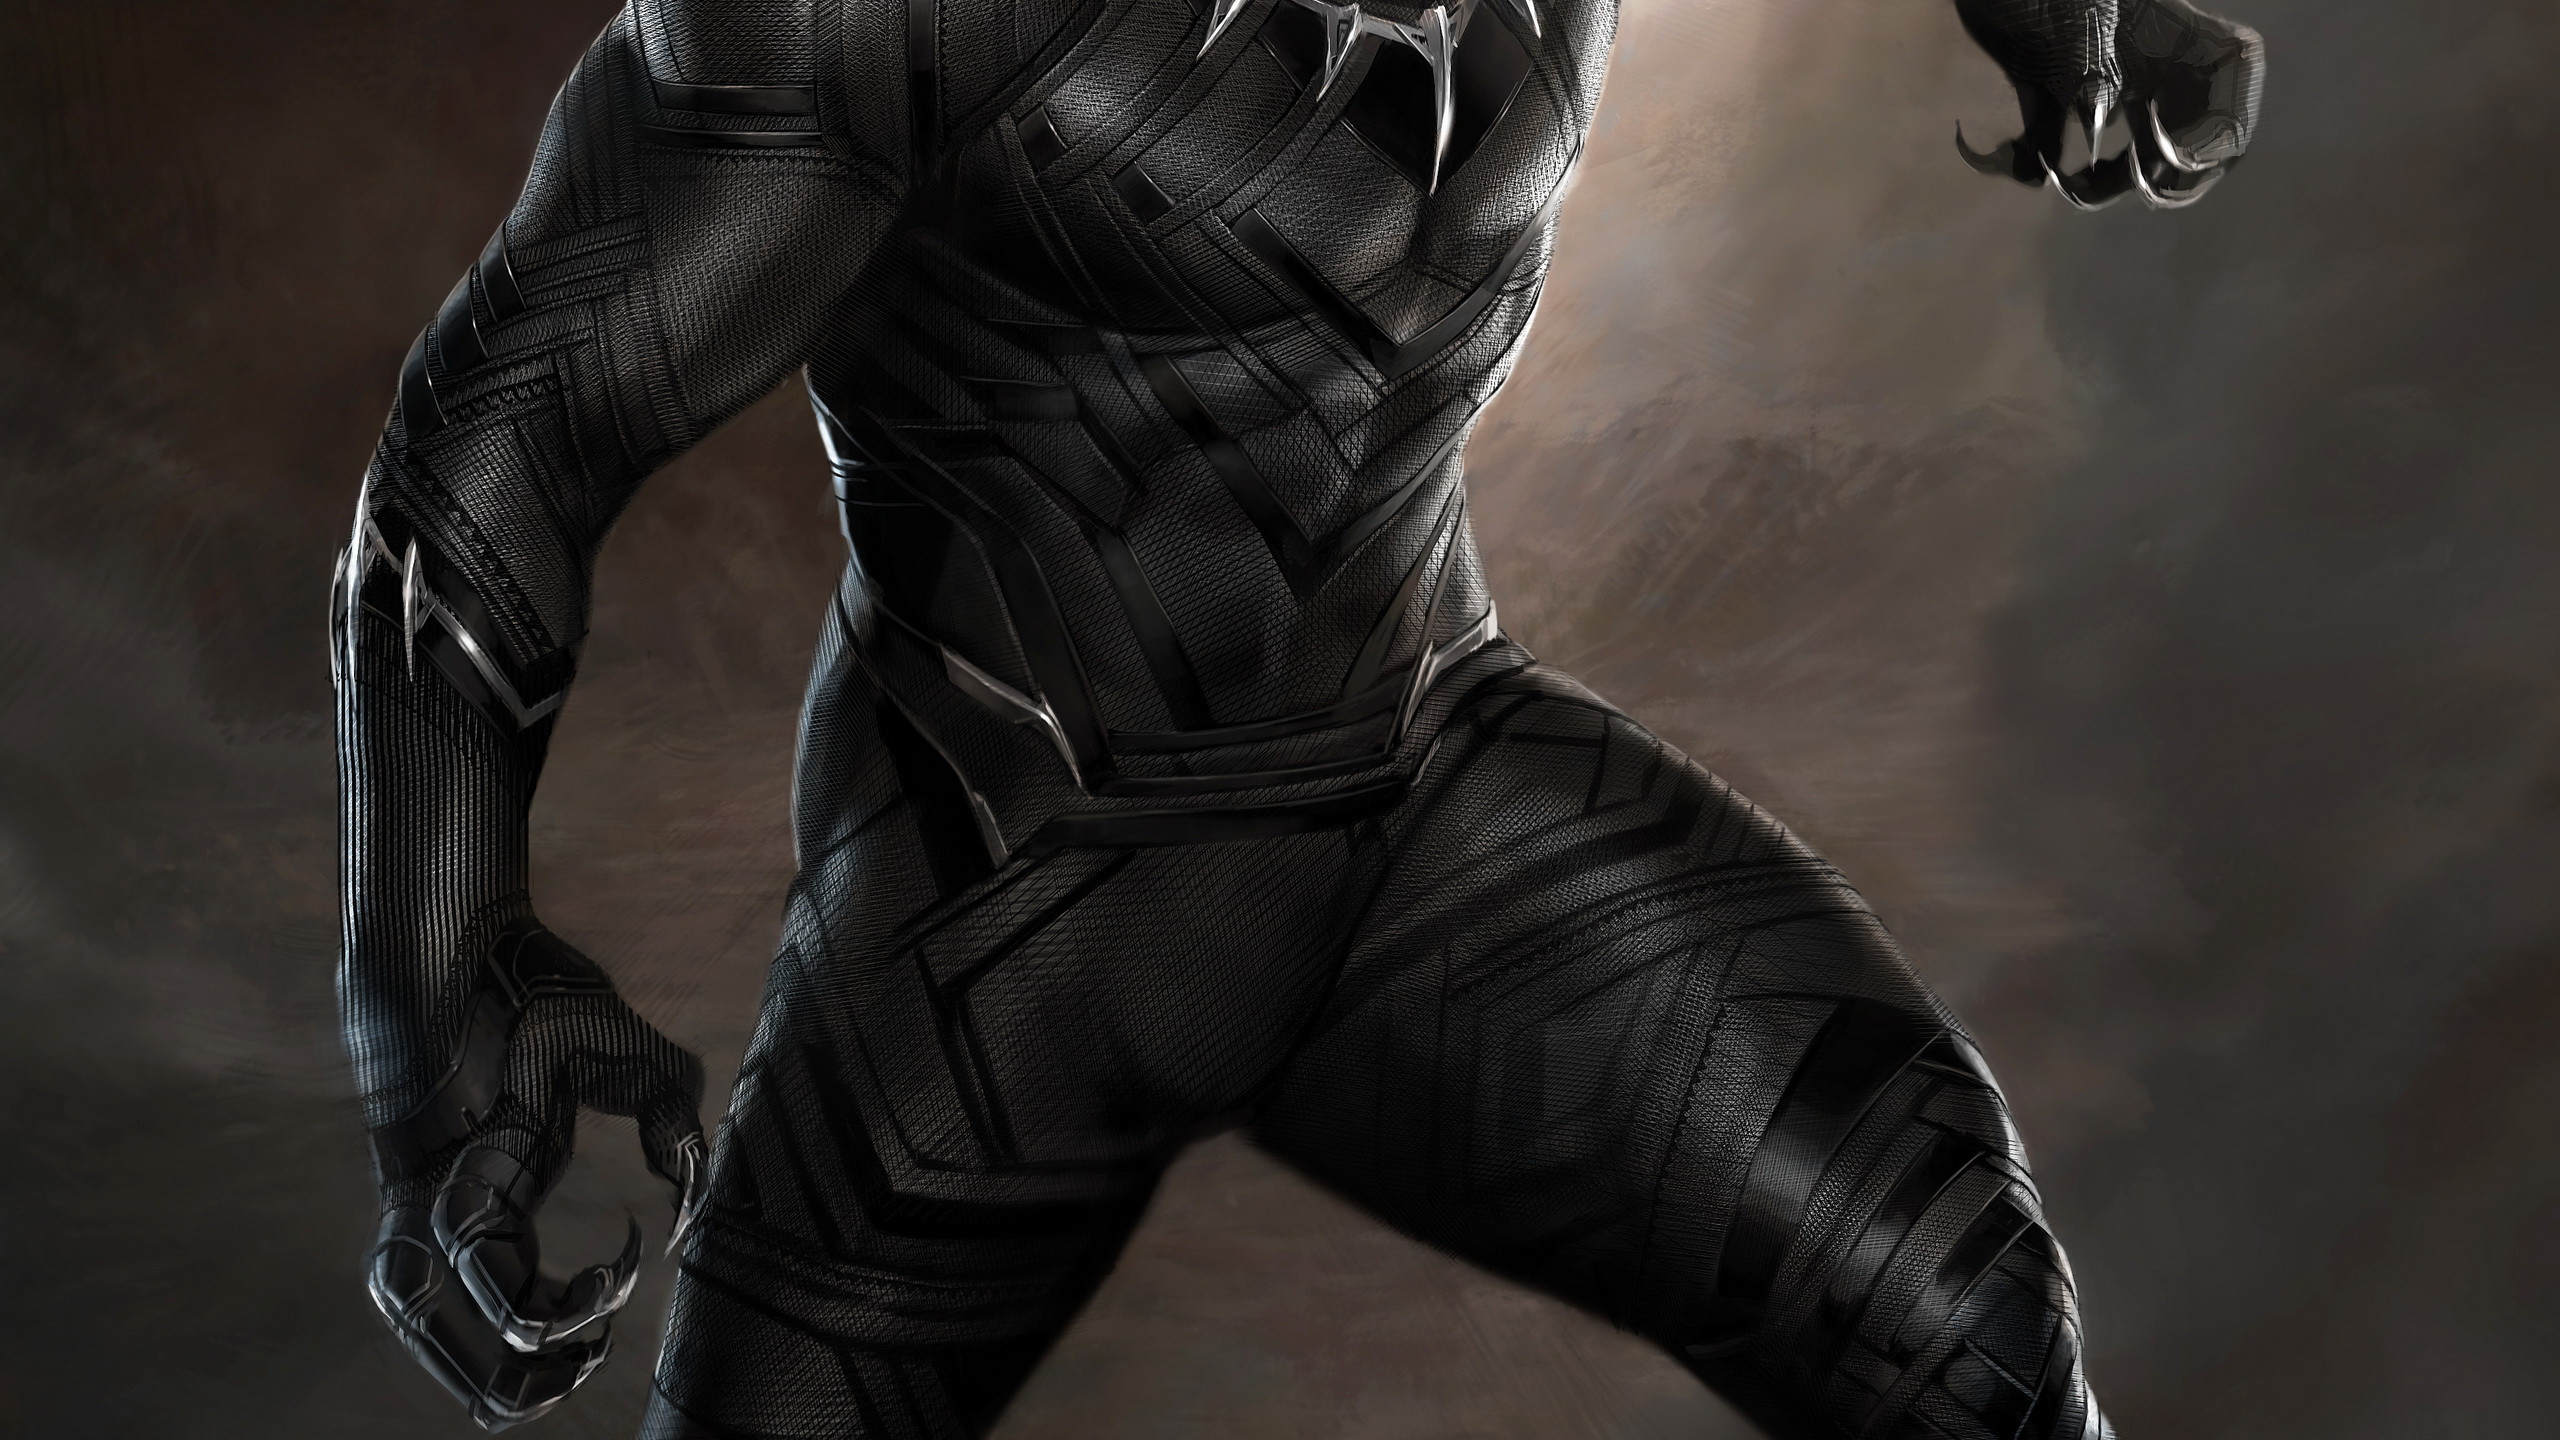  Black  Panther  Marvel Wallpapers    WallpaperTag